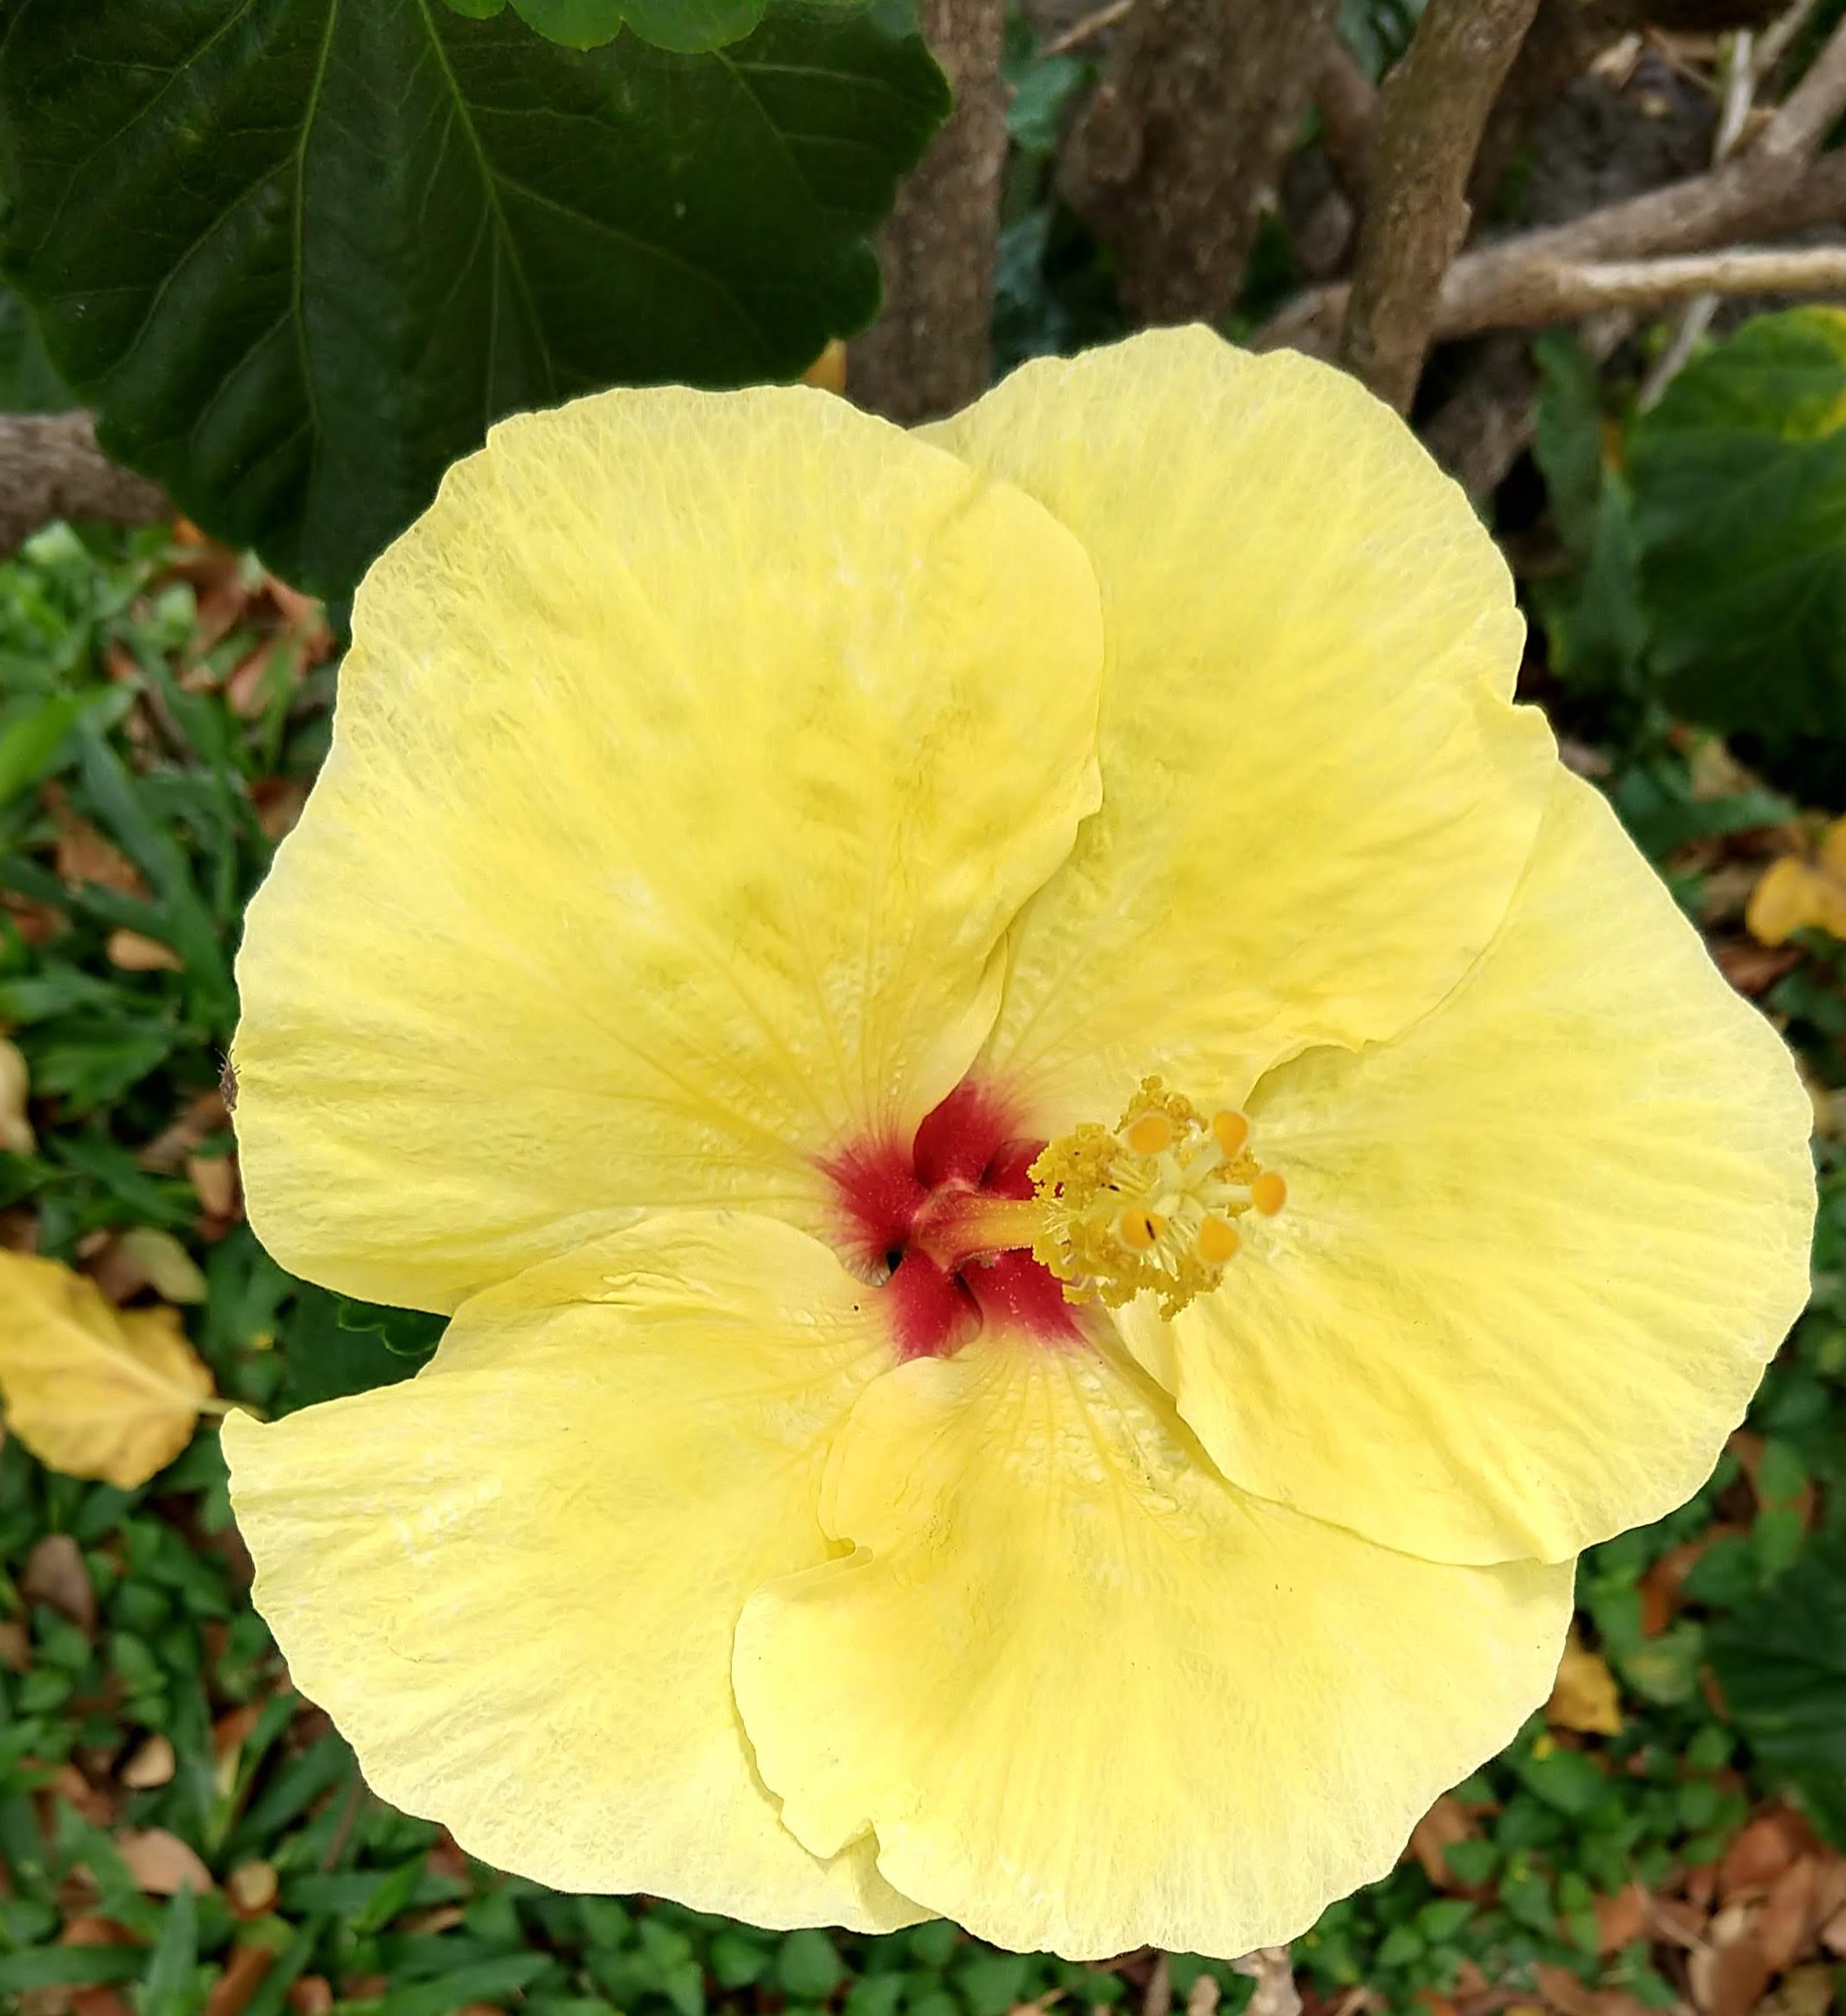 4 days in Honolulu, Hawaii